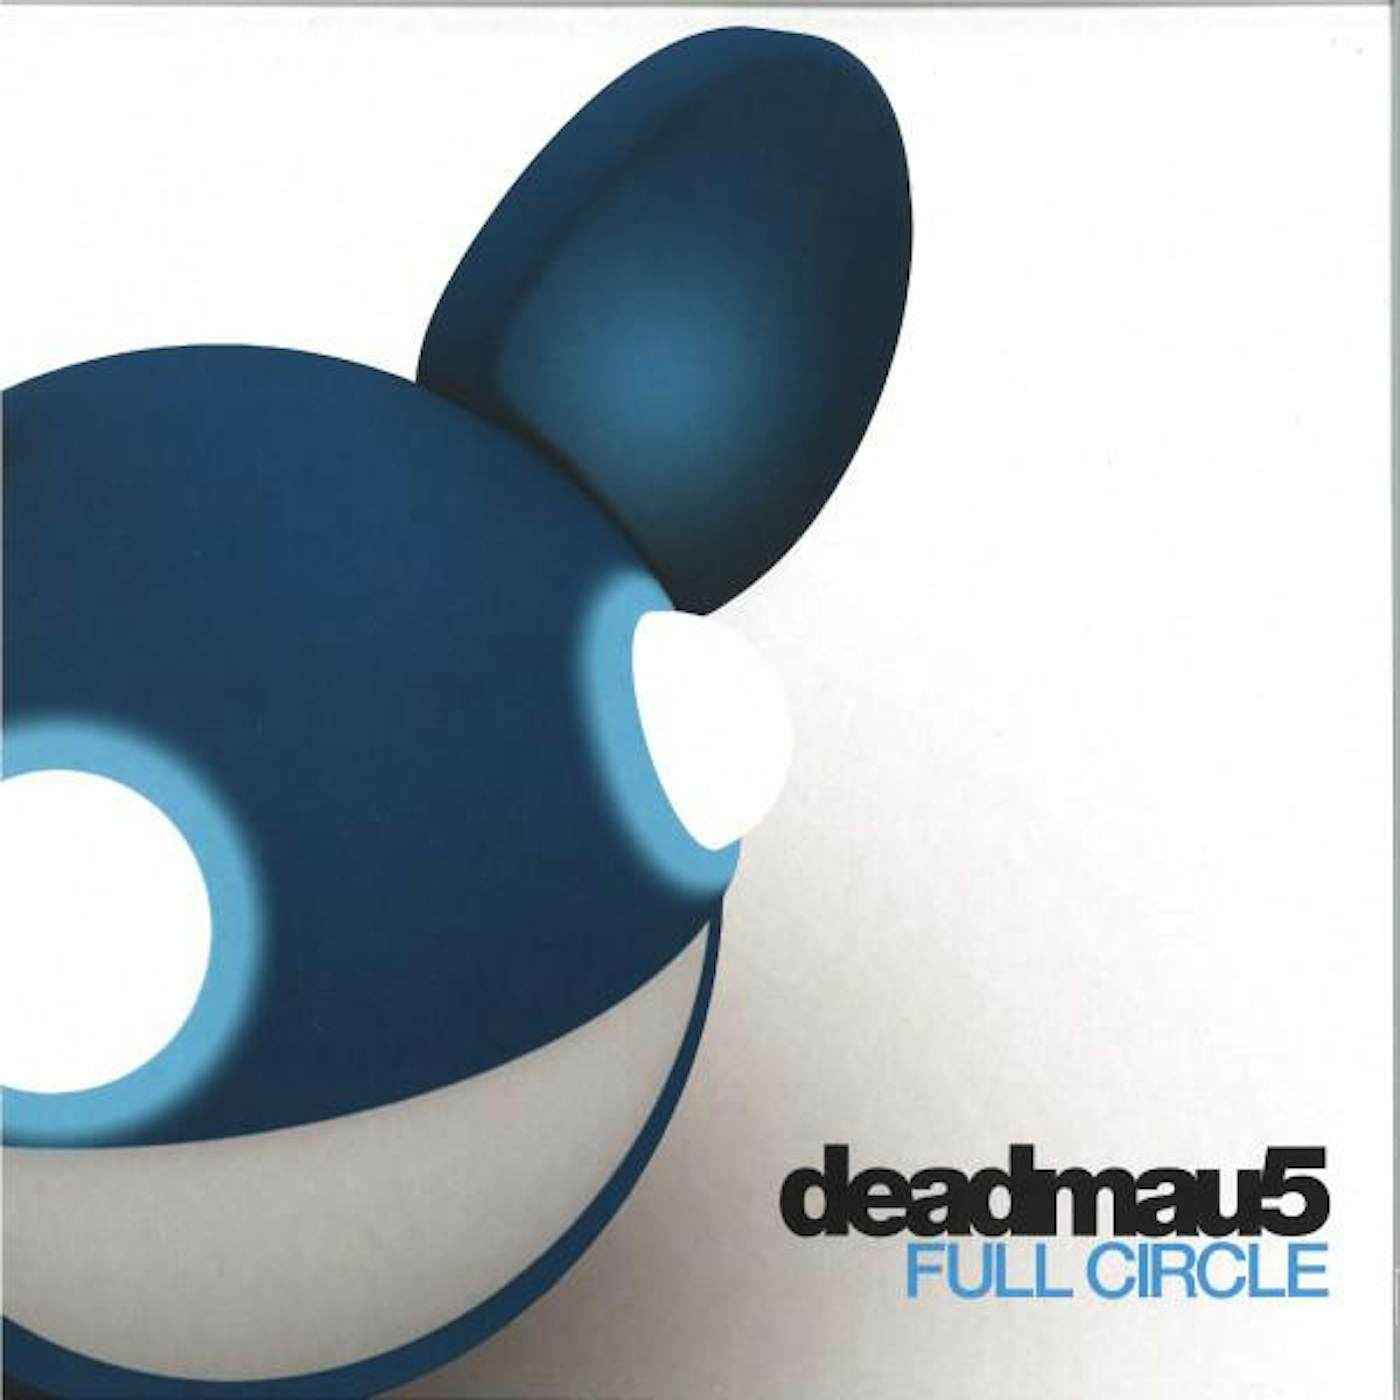 deadmau5 Full Circle Vinyl Record